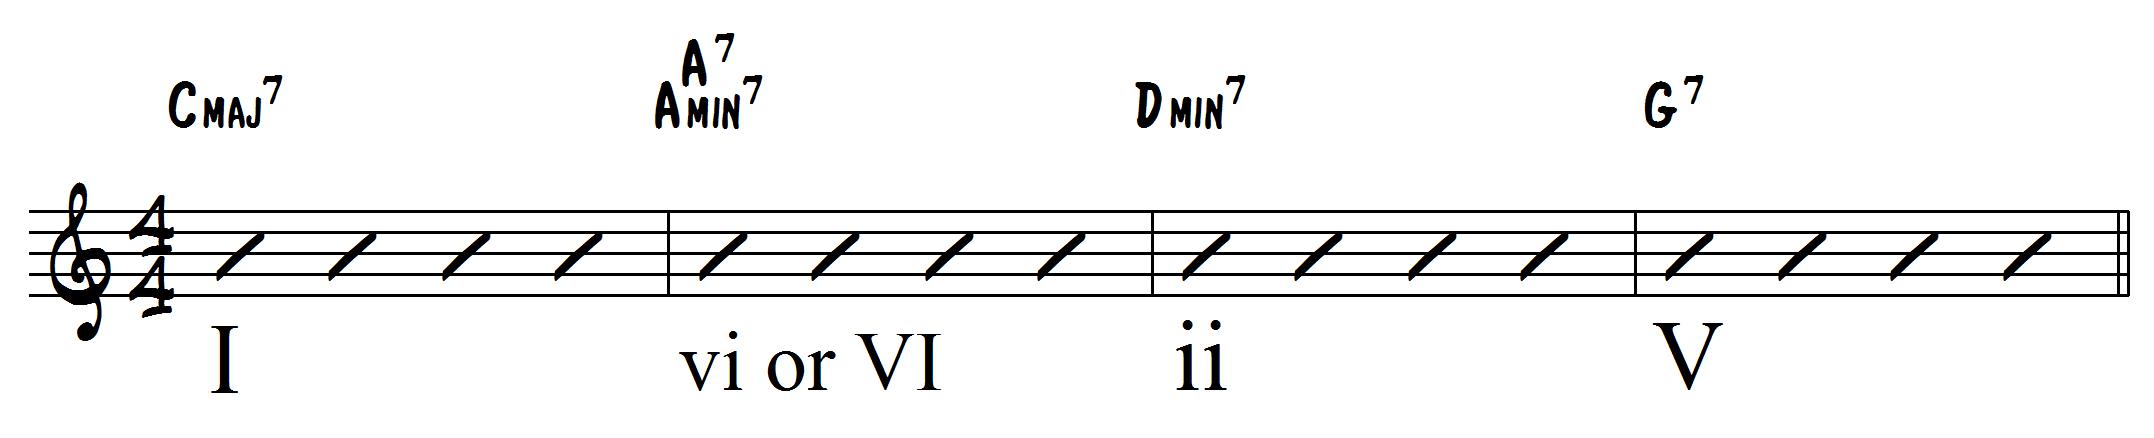 Major I-vi-ii-V Jazz Chord Progression